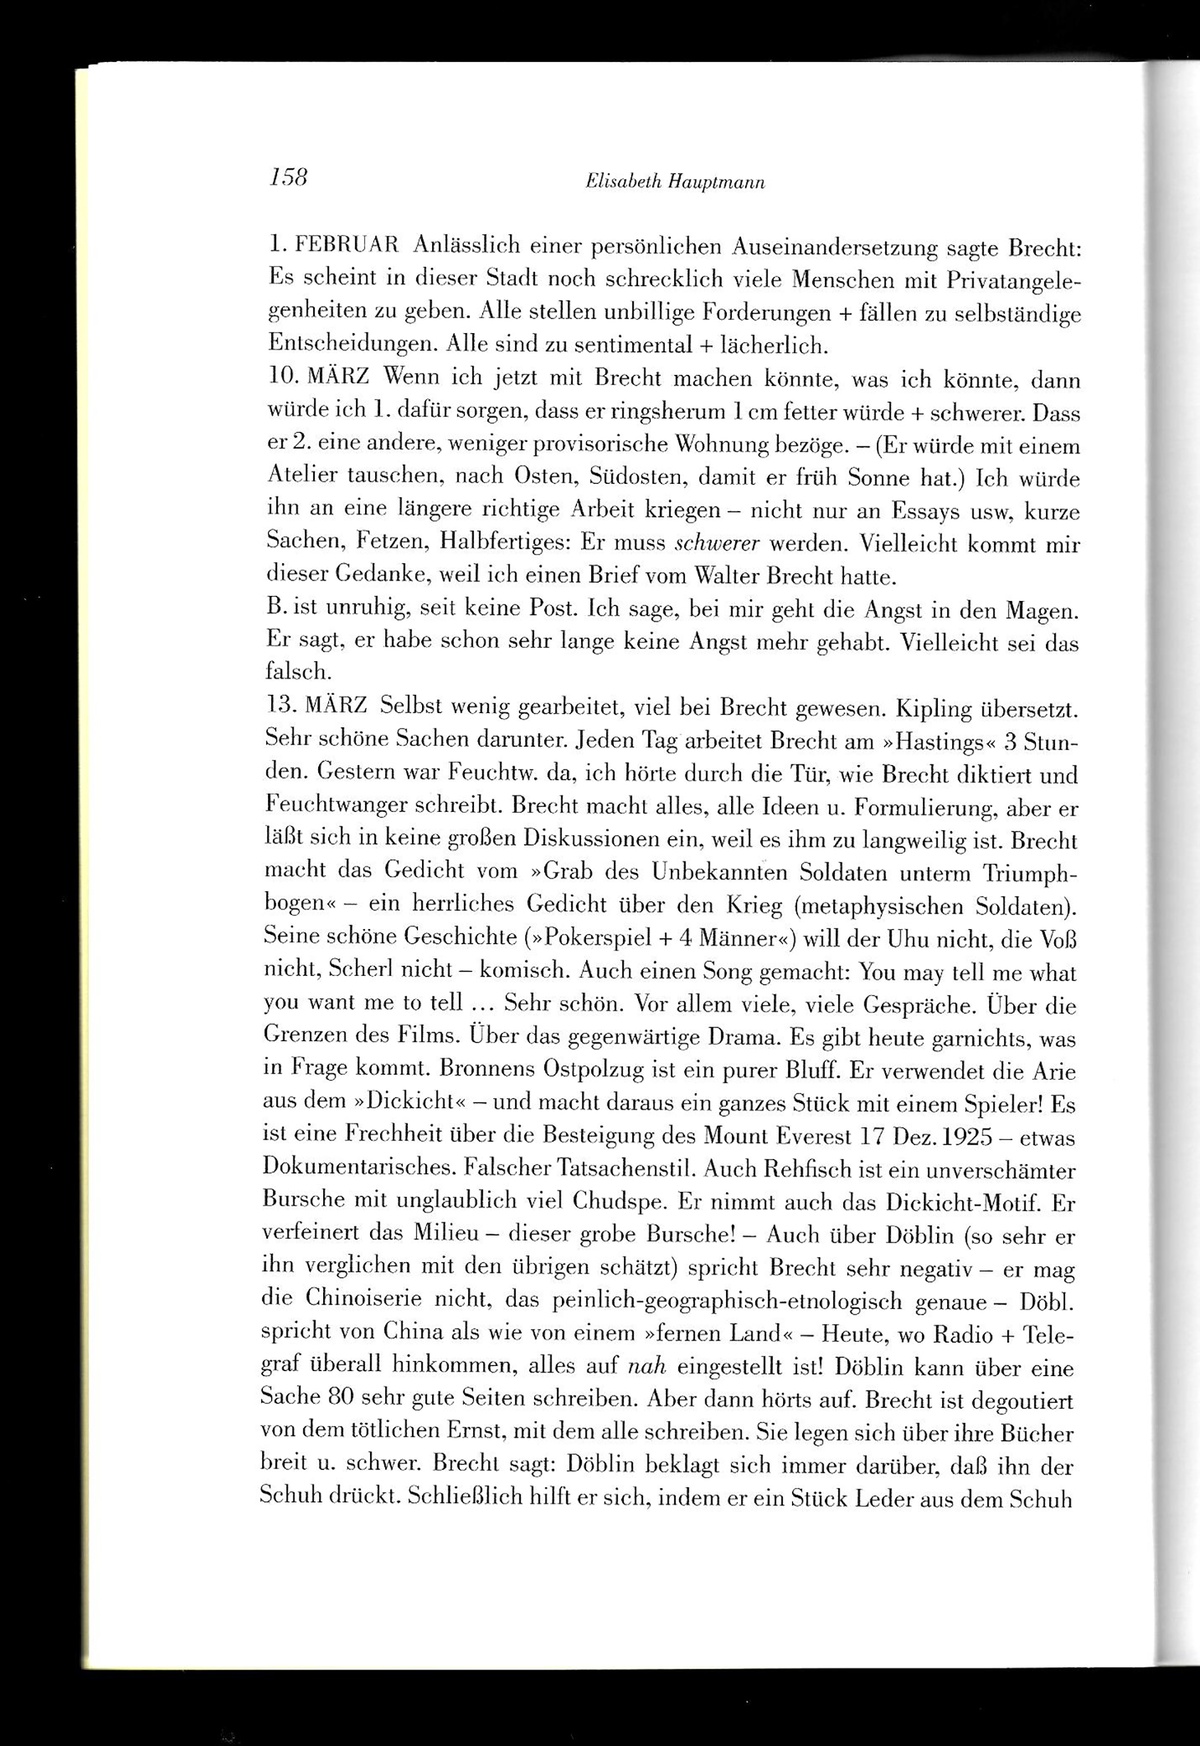 Elisabeth Hauptmann 2 × sehr über ihn geärgert. Diary notes on Brecht.With a prefatory note by Martin Kölbel and Peter Villwock.In Sinn und Form, Heft 2/2021, p. 155-163, here p. 158